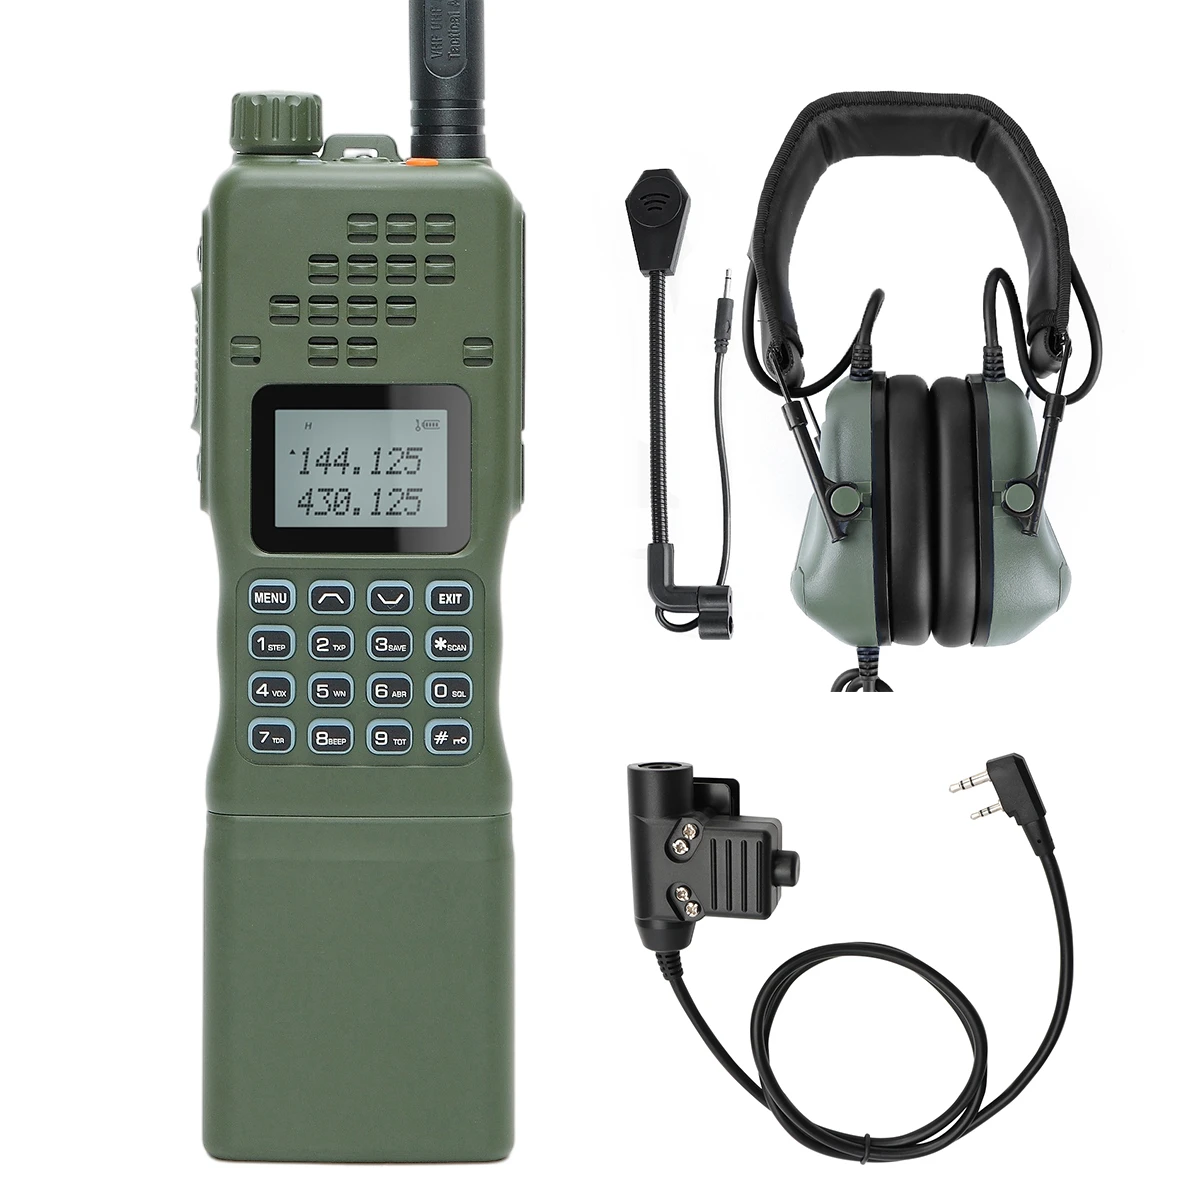 2 way radio Baofeng AR-152 15W Walkie Talkie Tactical Two way Radio with Noise Reduction Sound pickup Headset  Dual Band Radio AN /PRC-152 walkie talkie Walkie Talkie